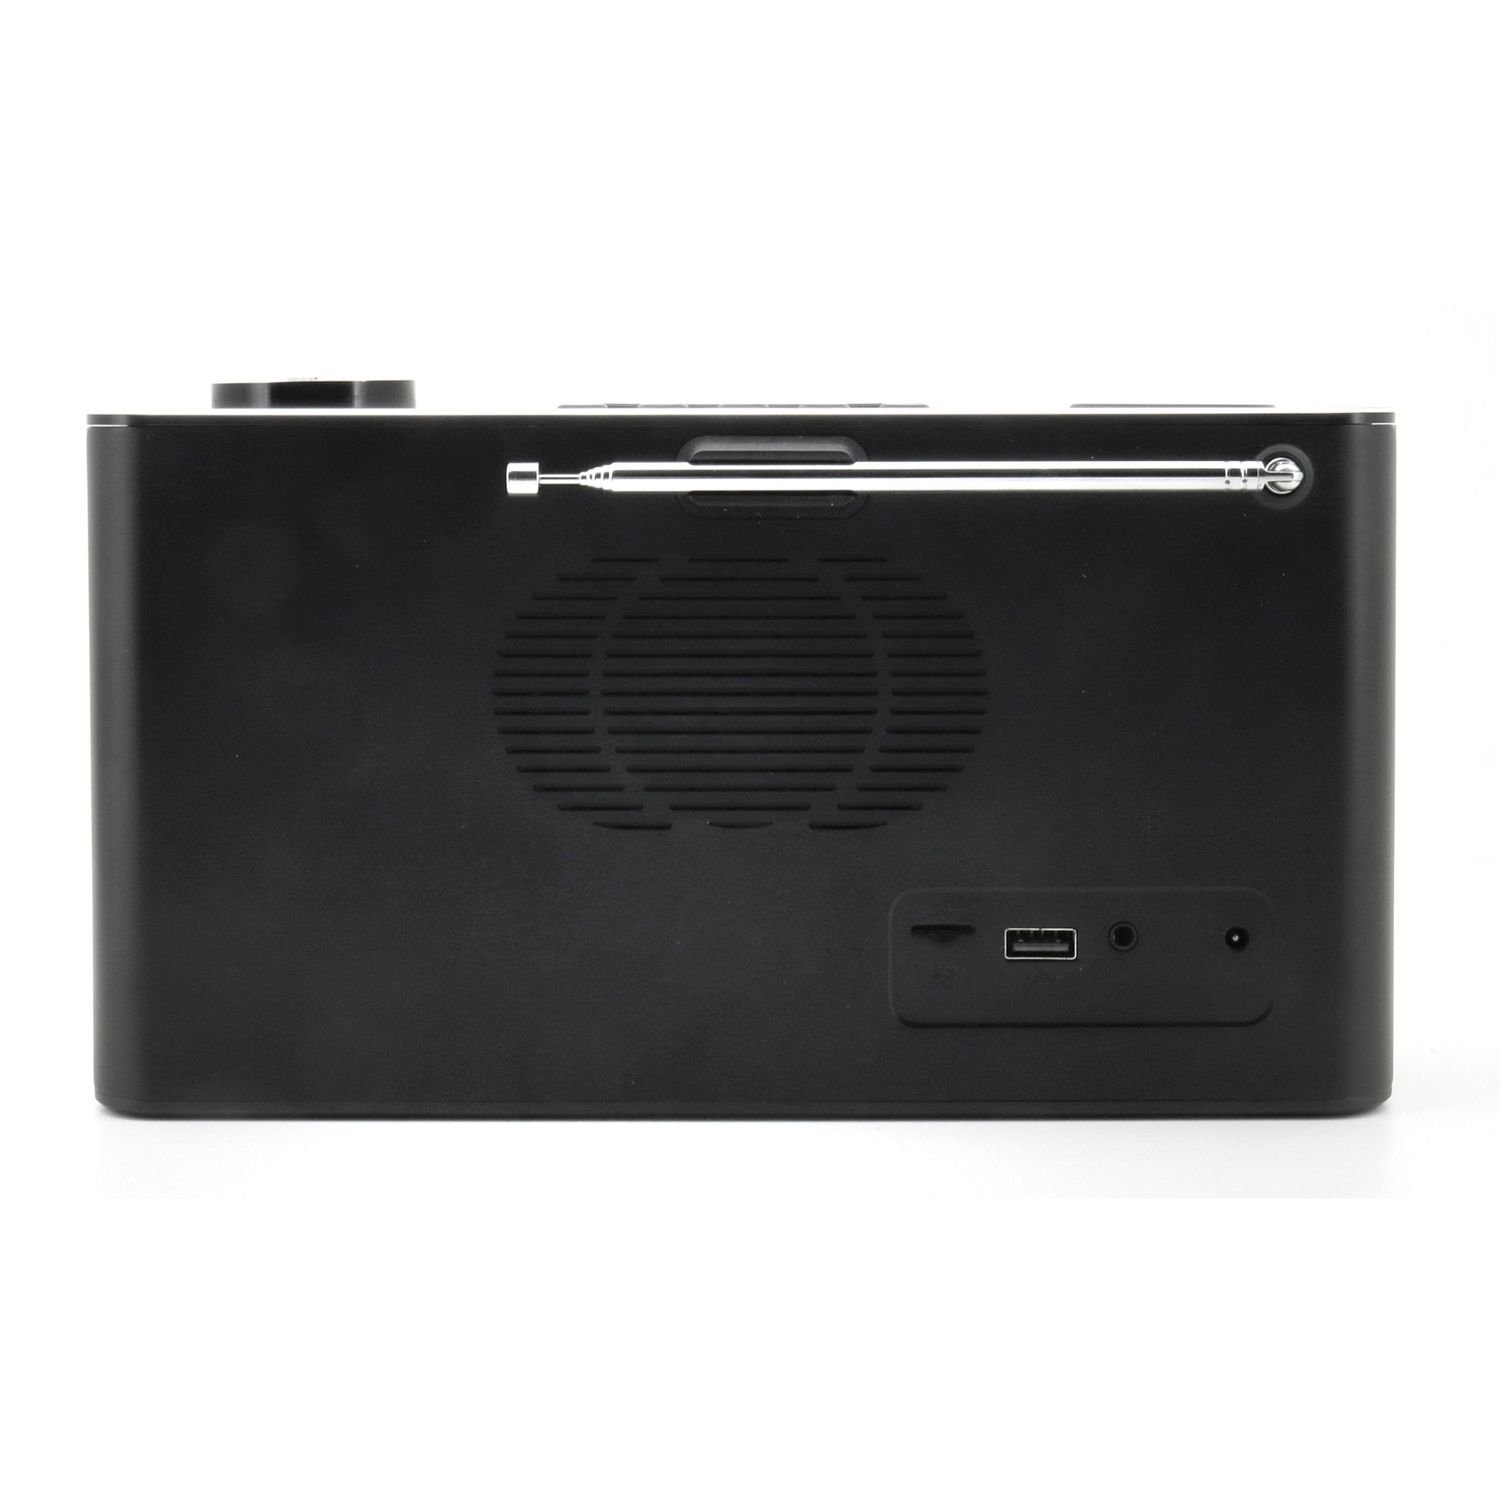 Soundmaster DAB700SW tragbares Radio DAB+ Boombox Streaming SD USB Boombox Bluetooth 2x6 W